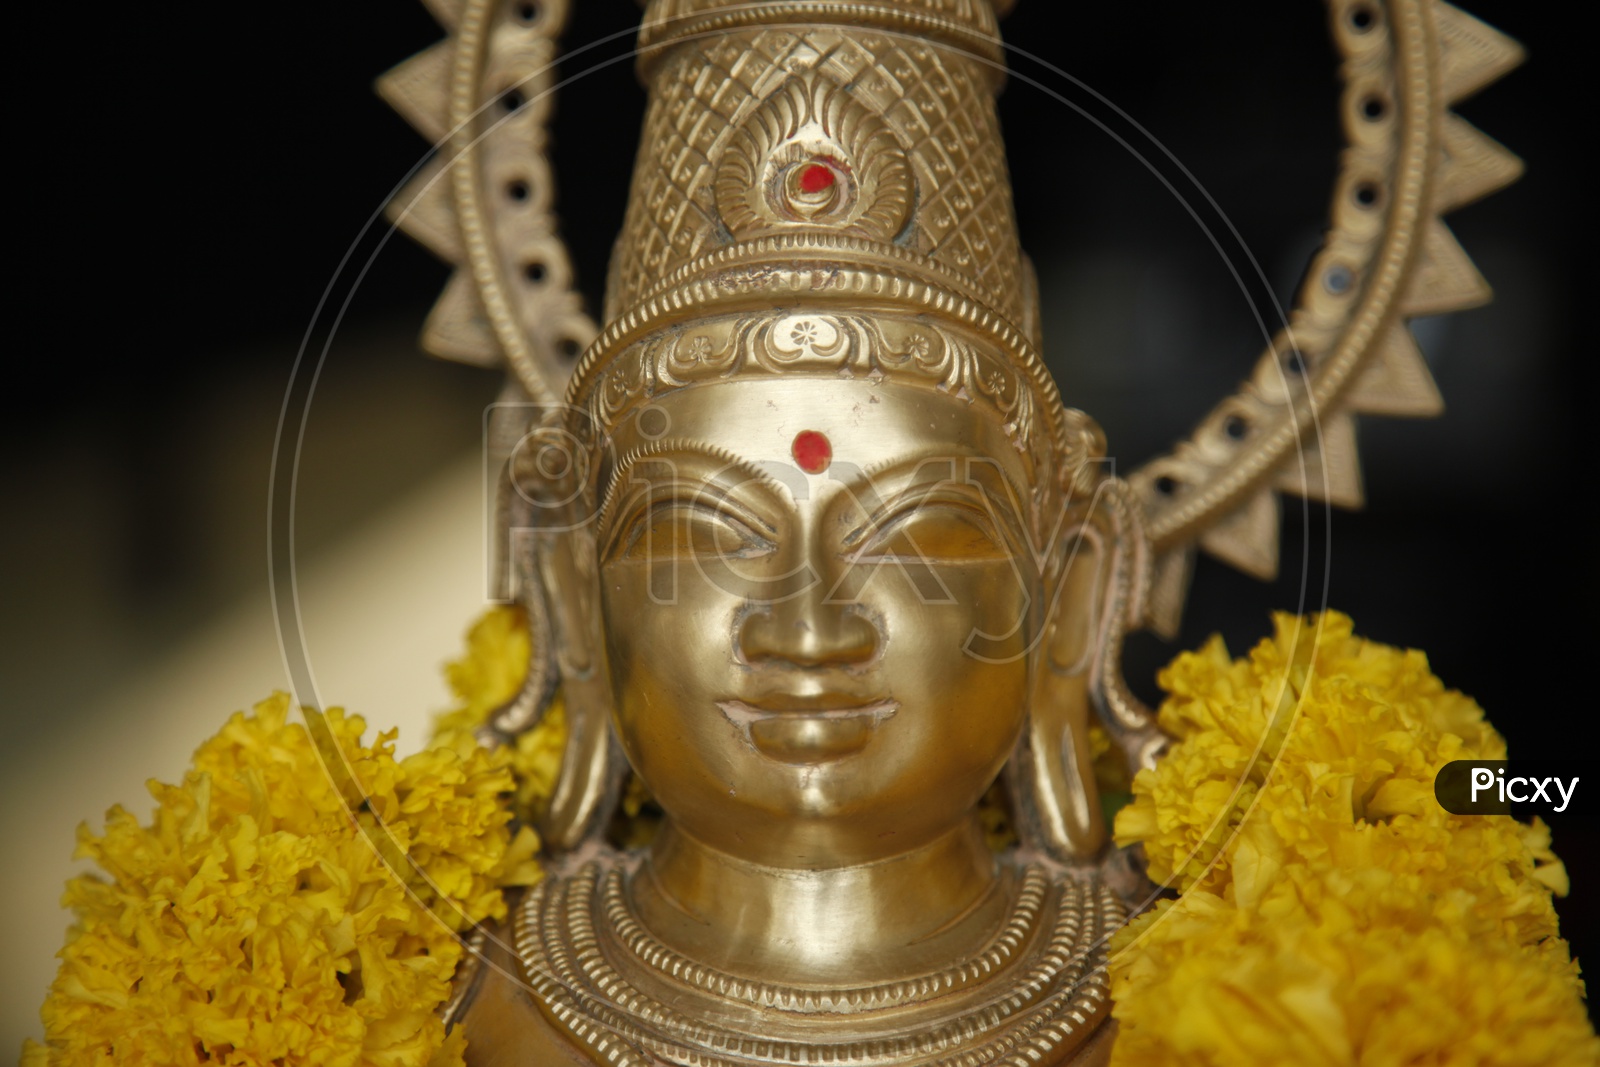 Gold coated statue of a Hindu Goddess